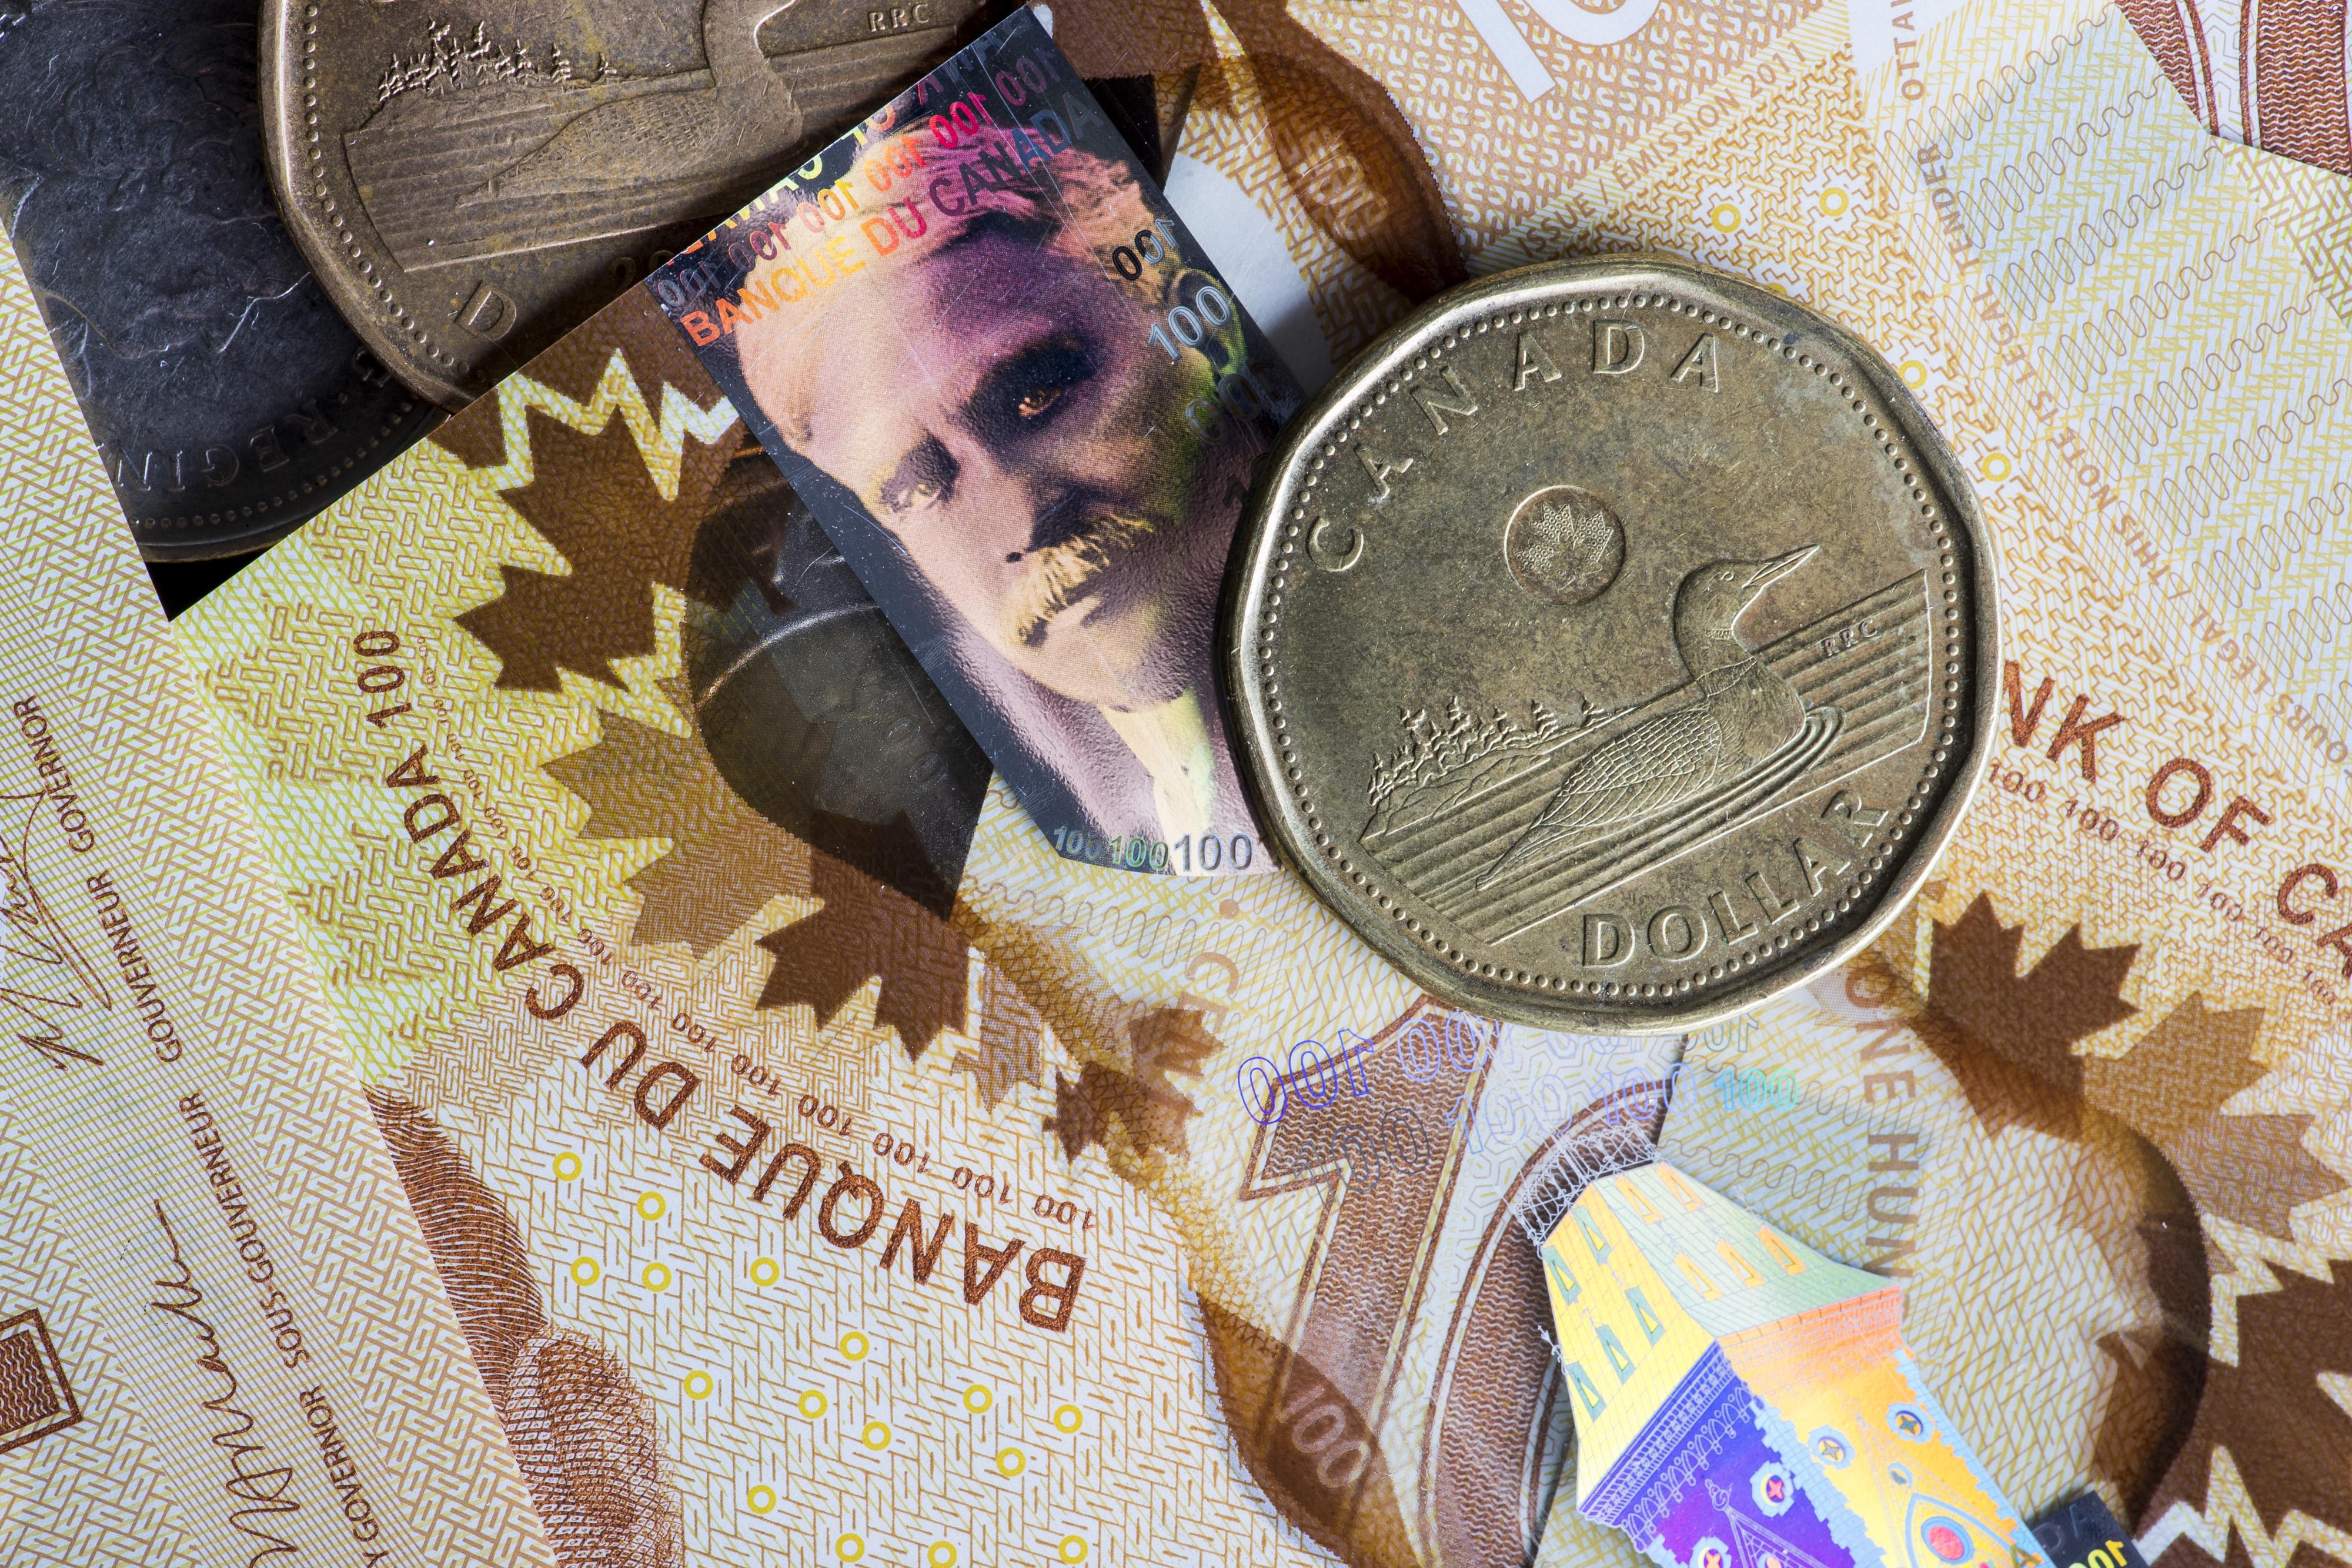 Canadian Dollar at Risk of Falling Against US Dollar | IG UK